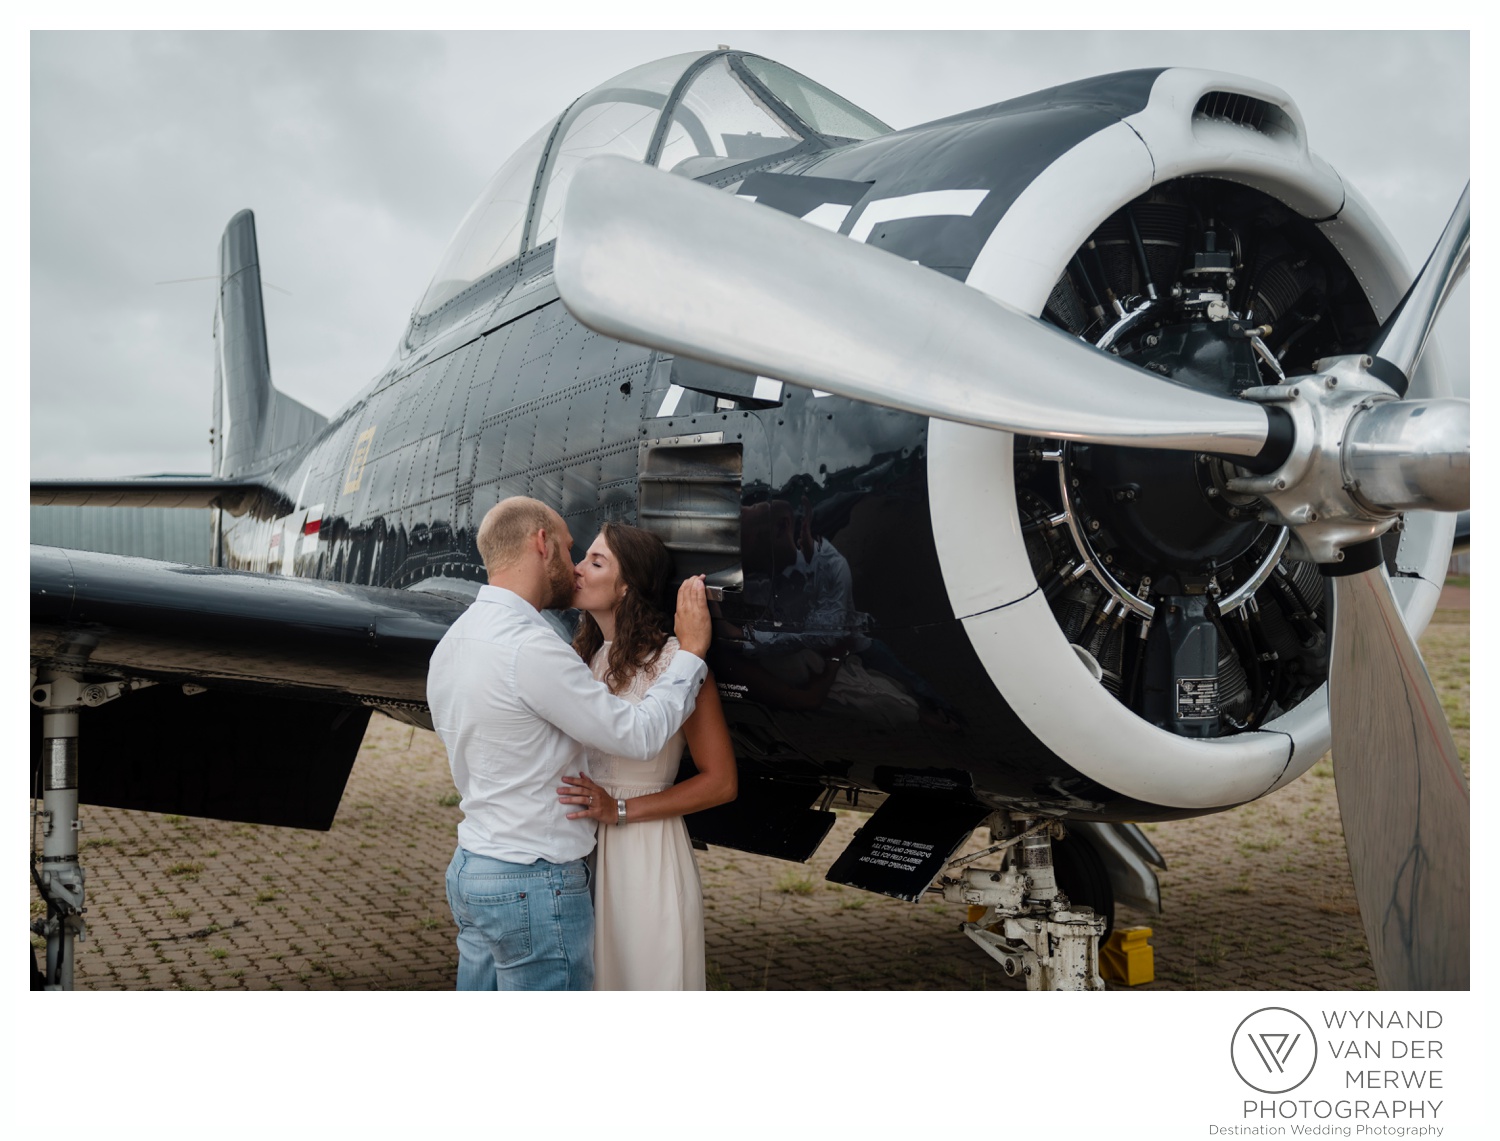 WynandvanderMerwe_weddingphotography_engagementshoot_wonderboomairport_aeroplane_klaasjanmareli_gauteng_2018-5b.jpg